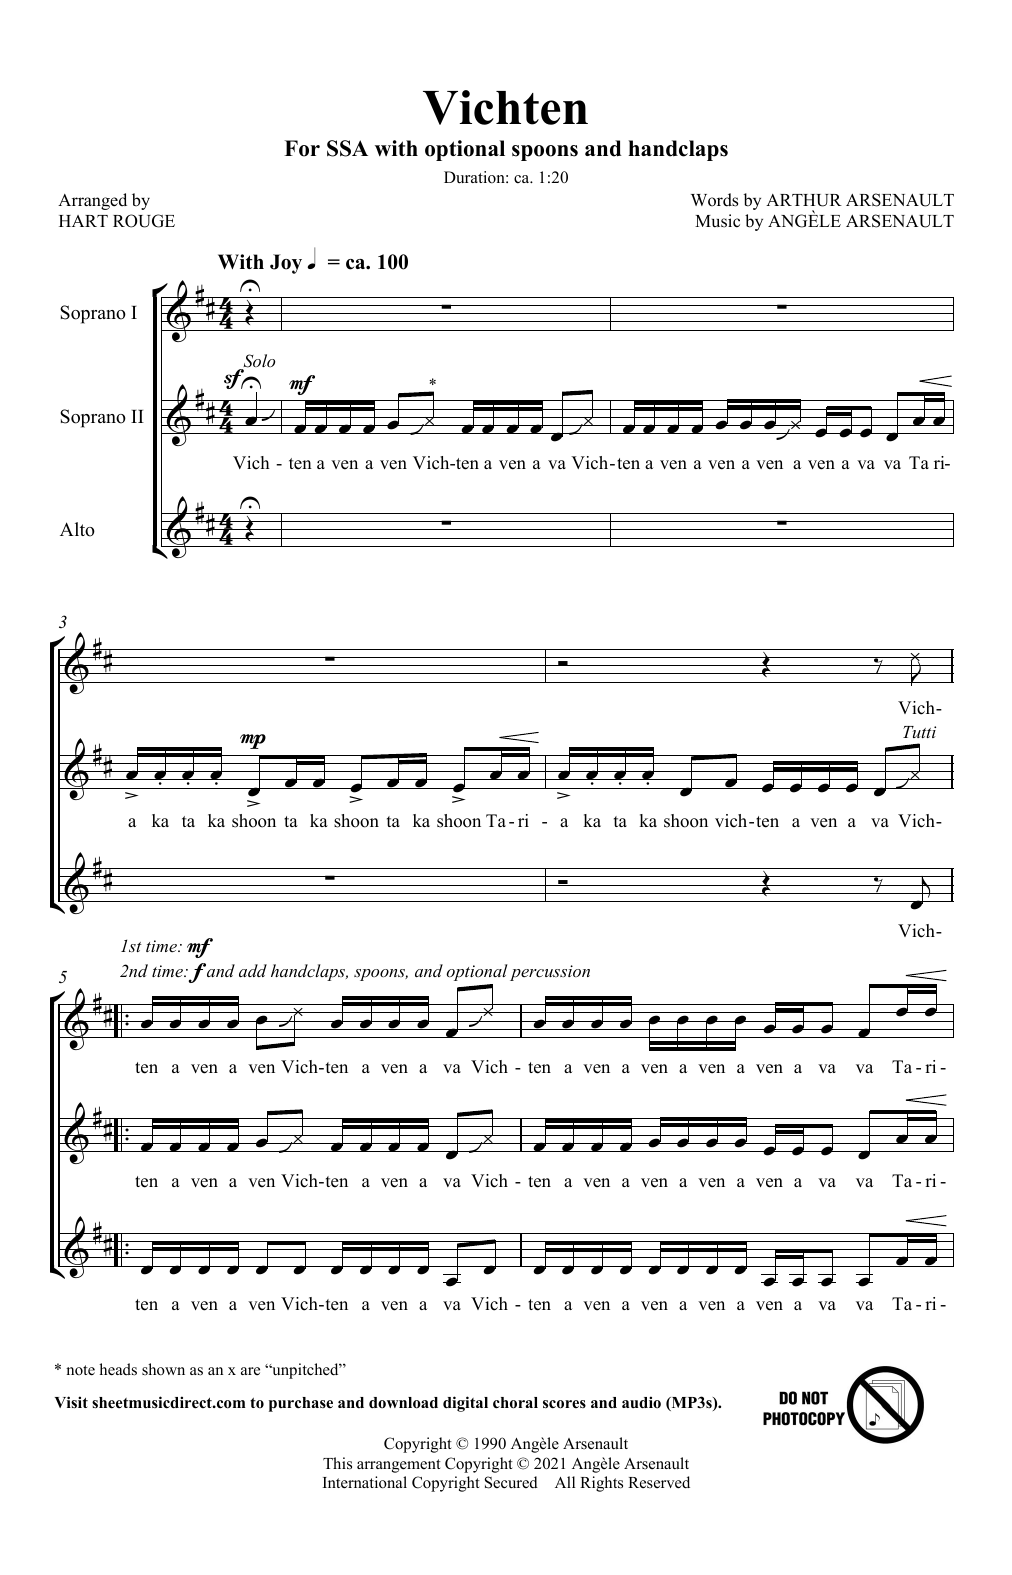 Arthur Arsenault Vichten (arr. Hart Rouge) Sheet Music Notes & Chords for SSA Choir - Download or Print PDF